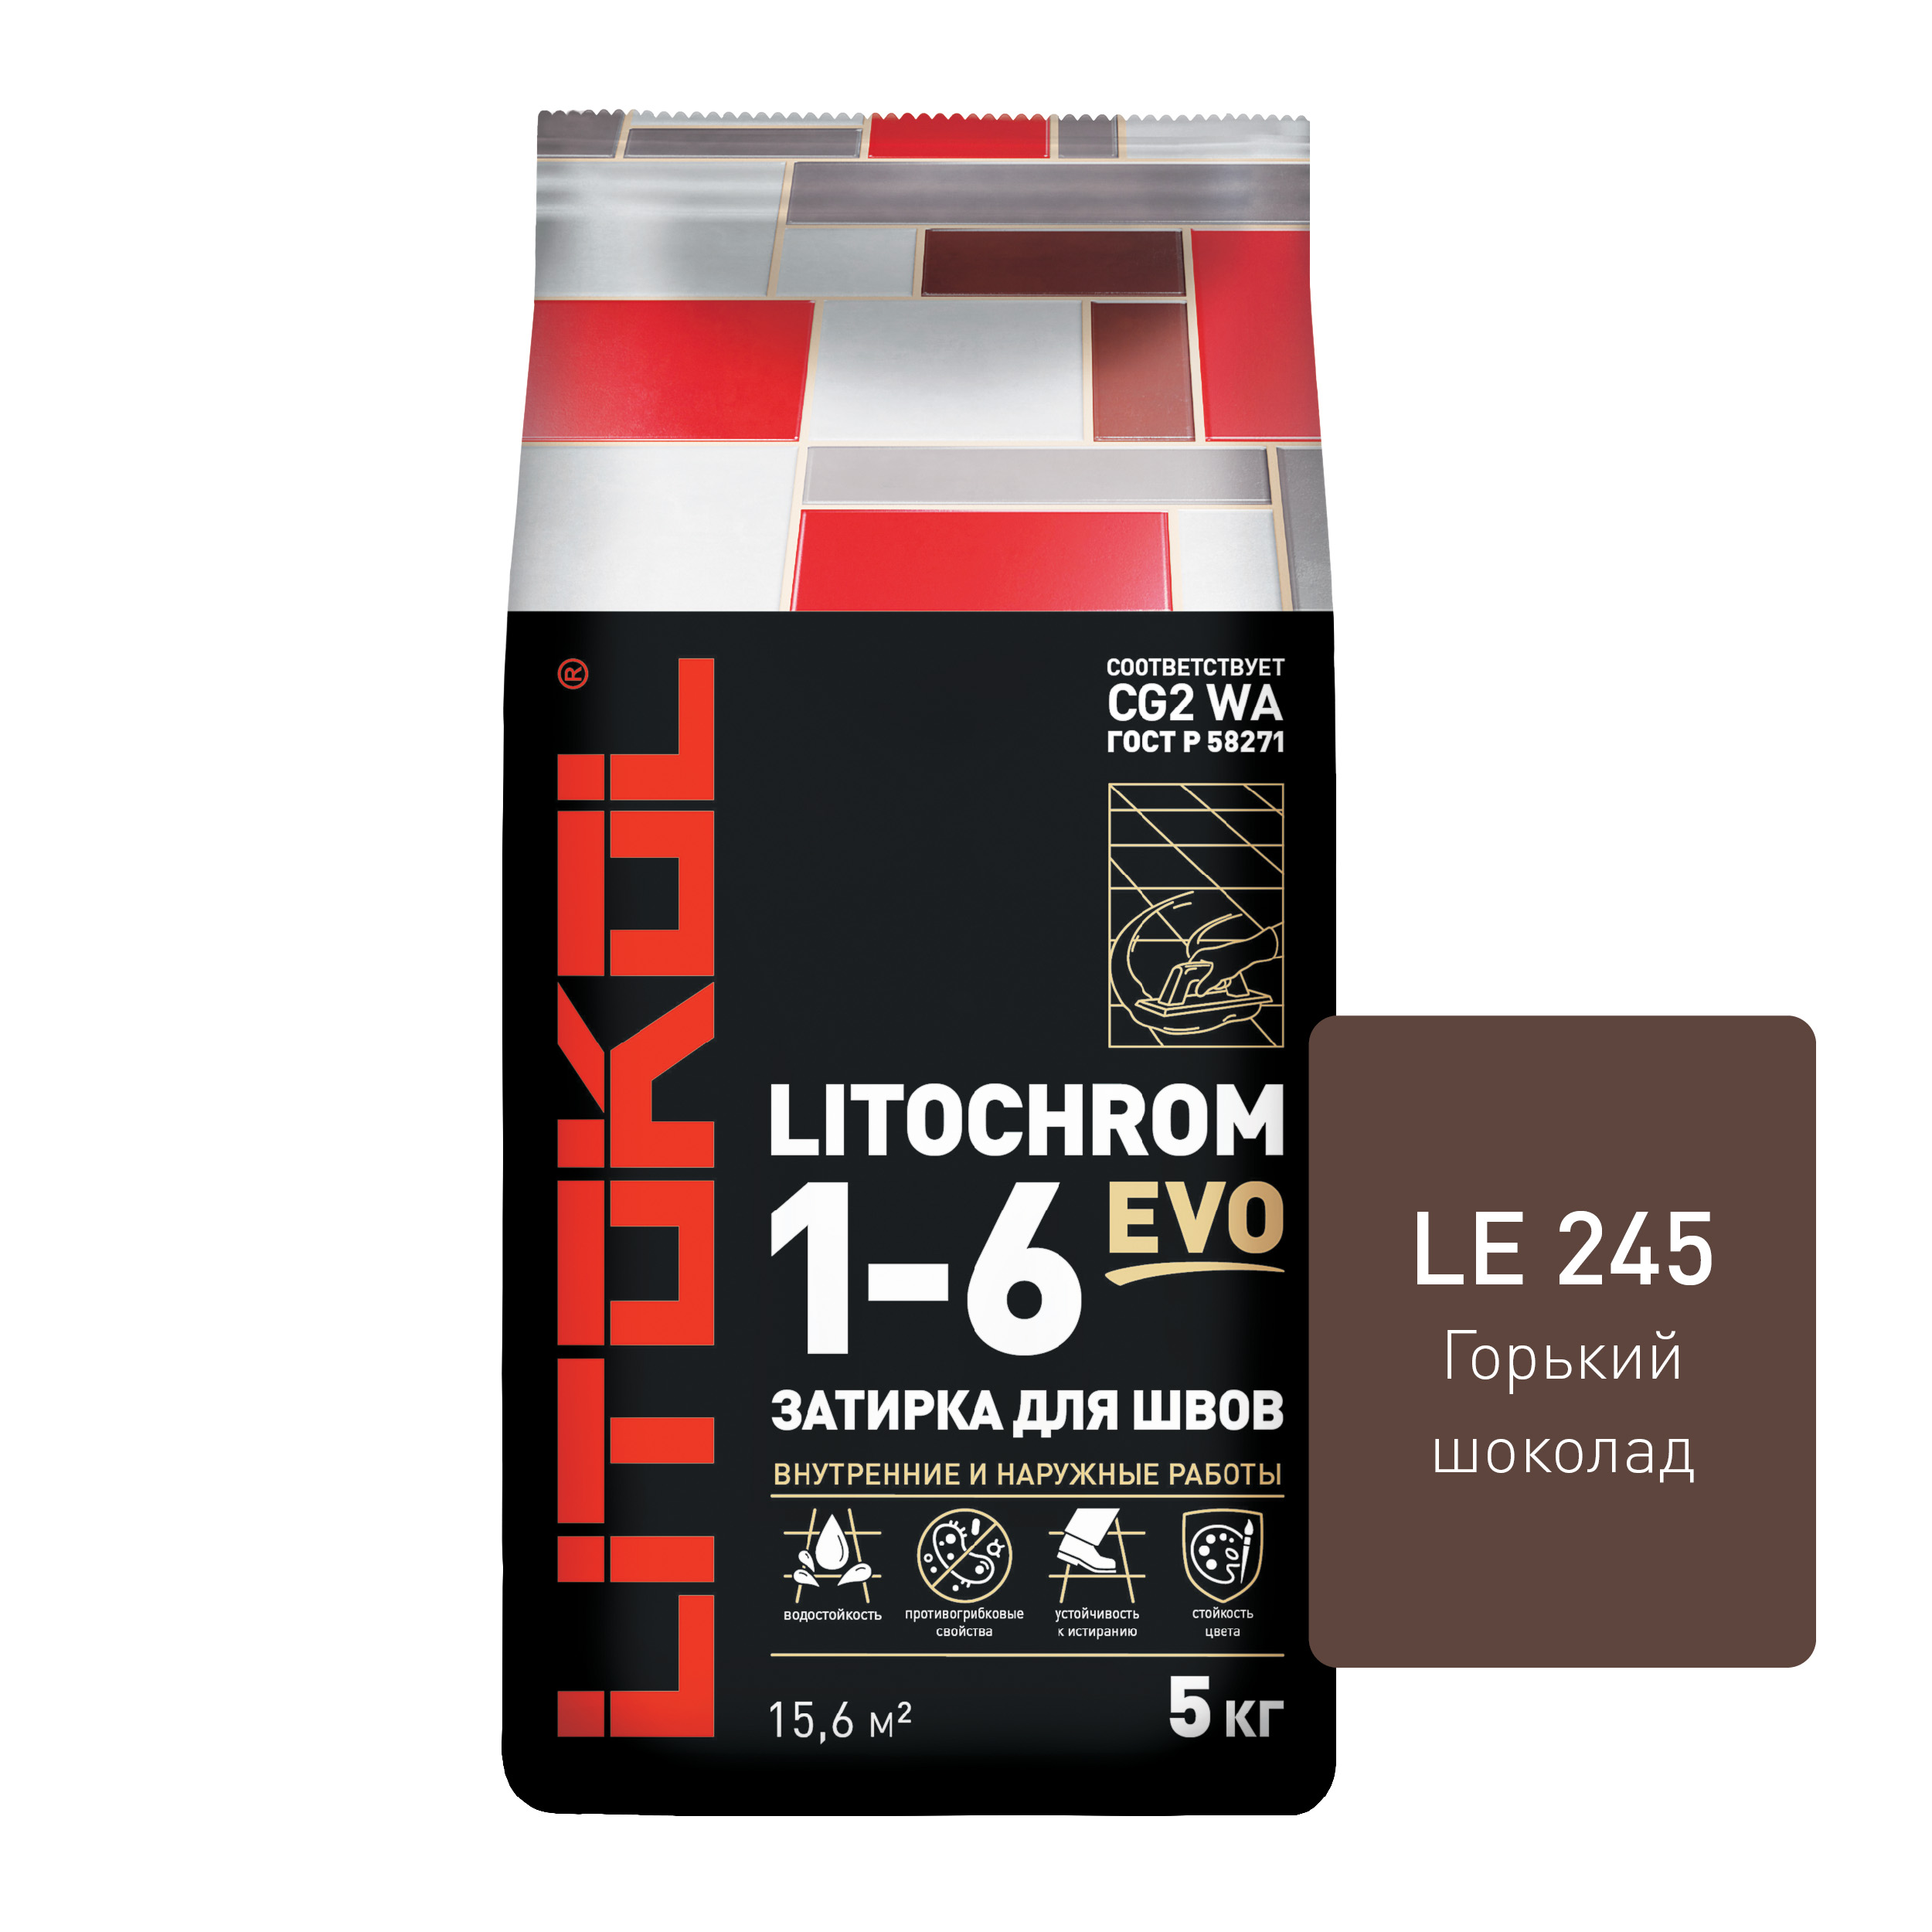 фото Цементная затирка litokol litochrom 1-6 evo le.245 горький шоколад, 5 кг